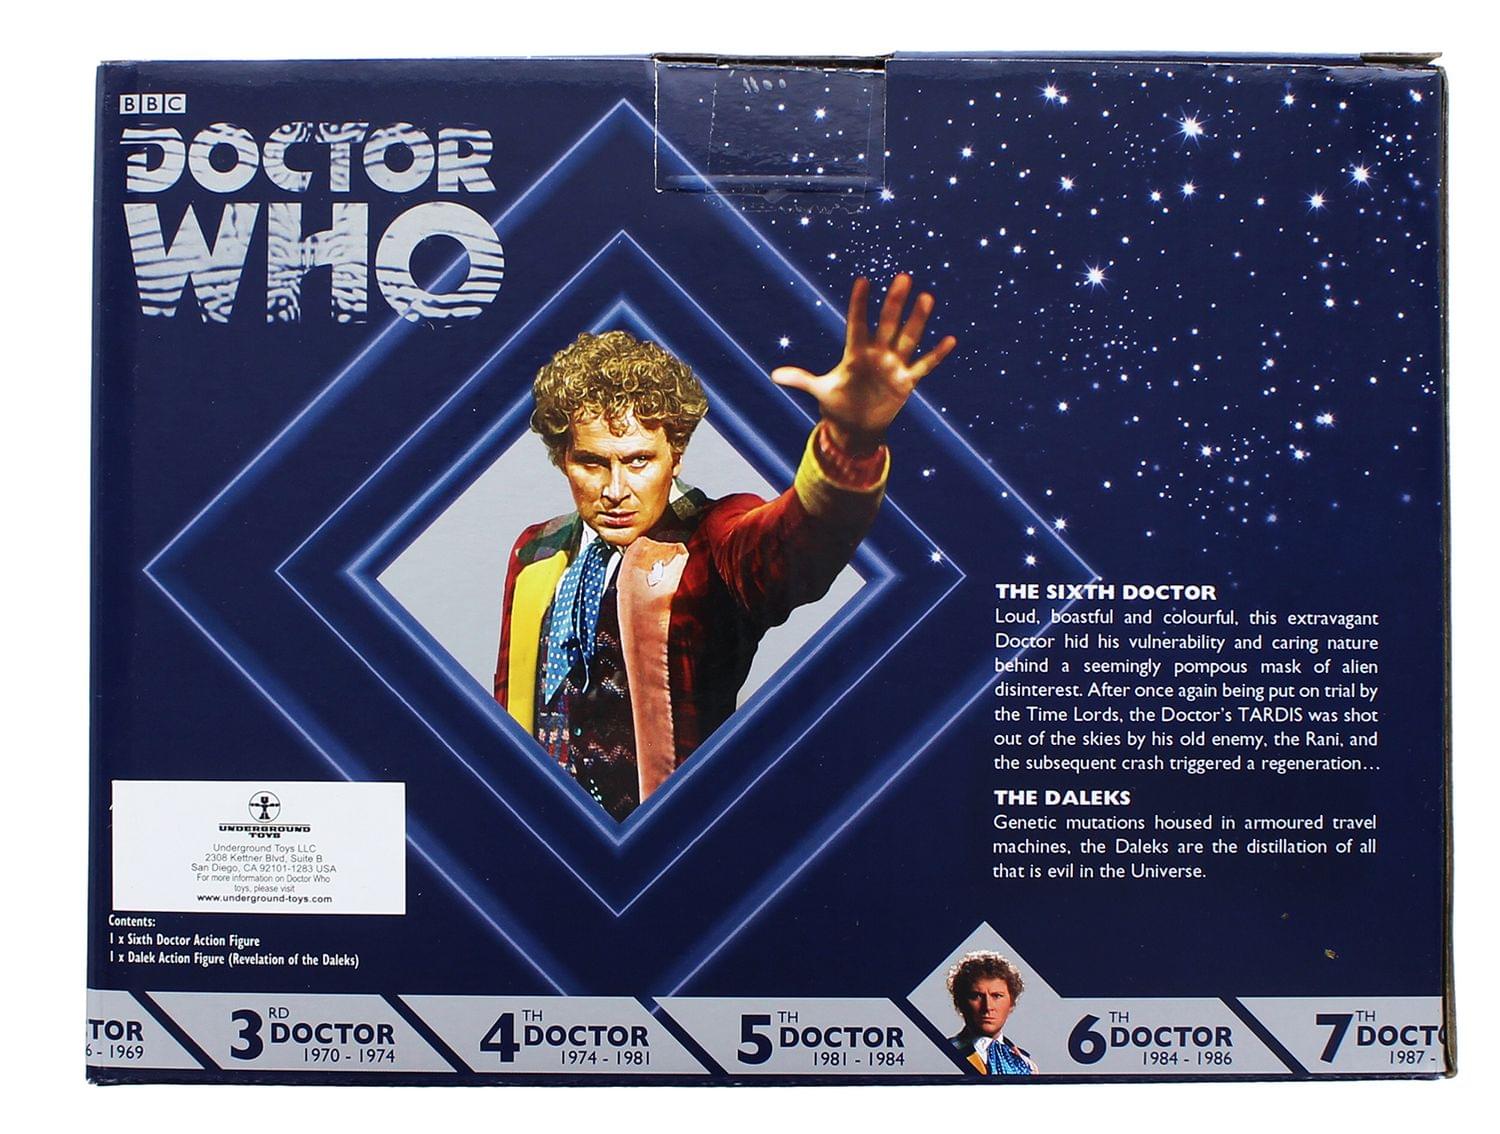 Doctor Who 6th Doctor w/ Dalek 6 Inch Figure Set - Revelation of the Daleks